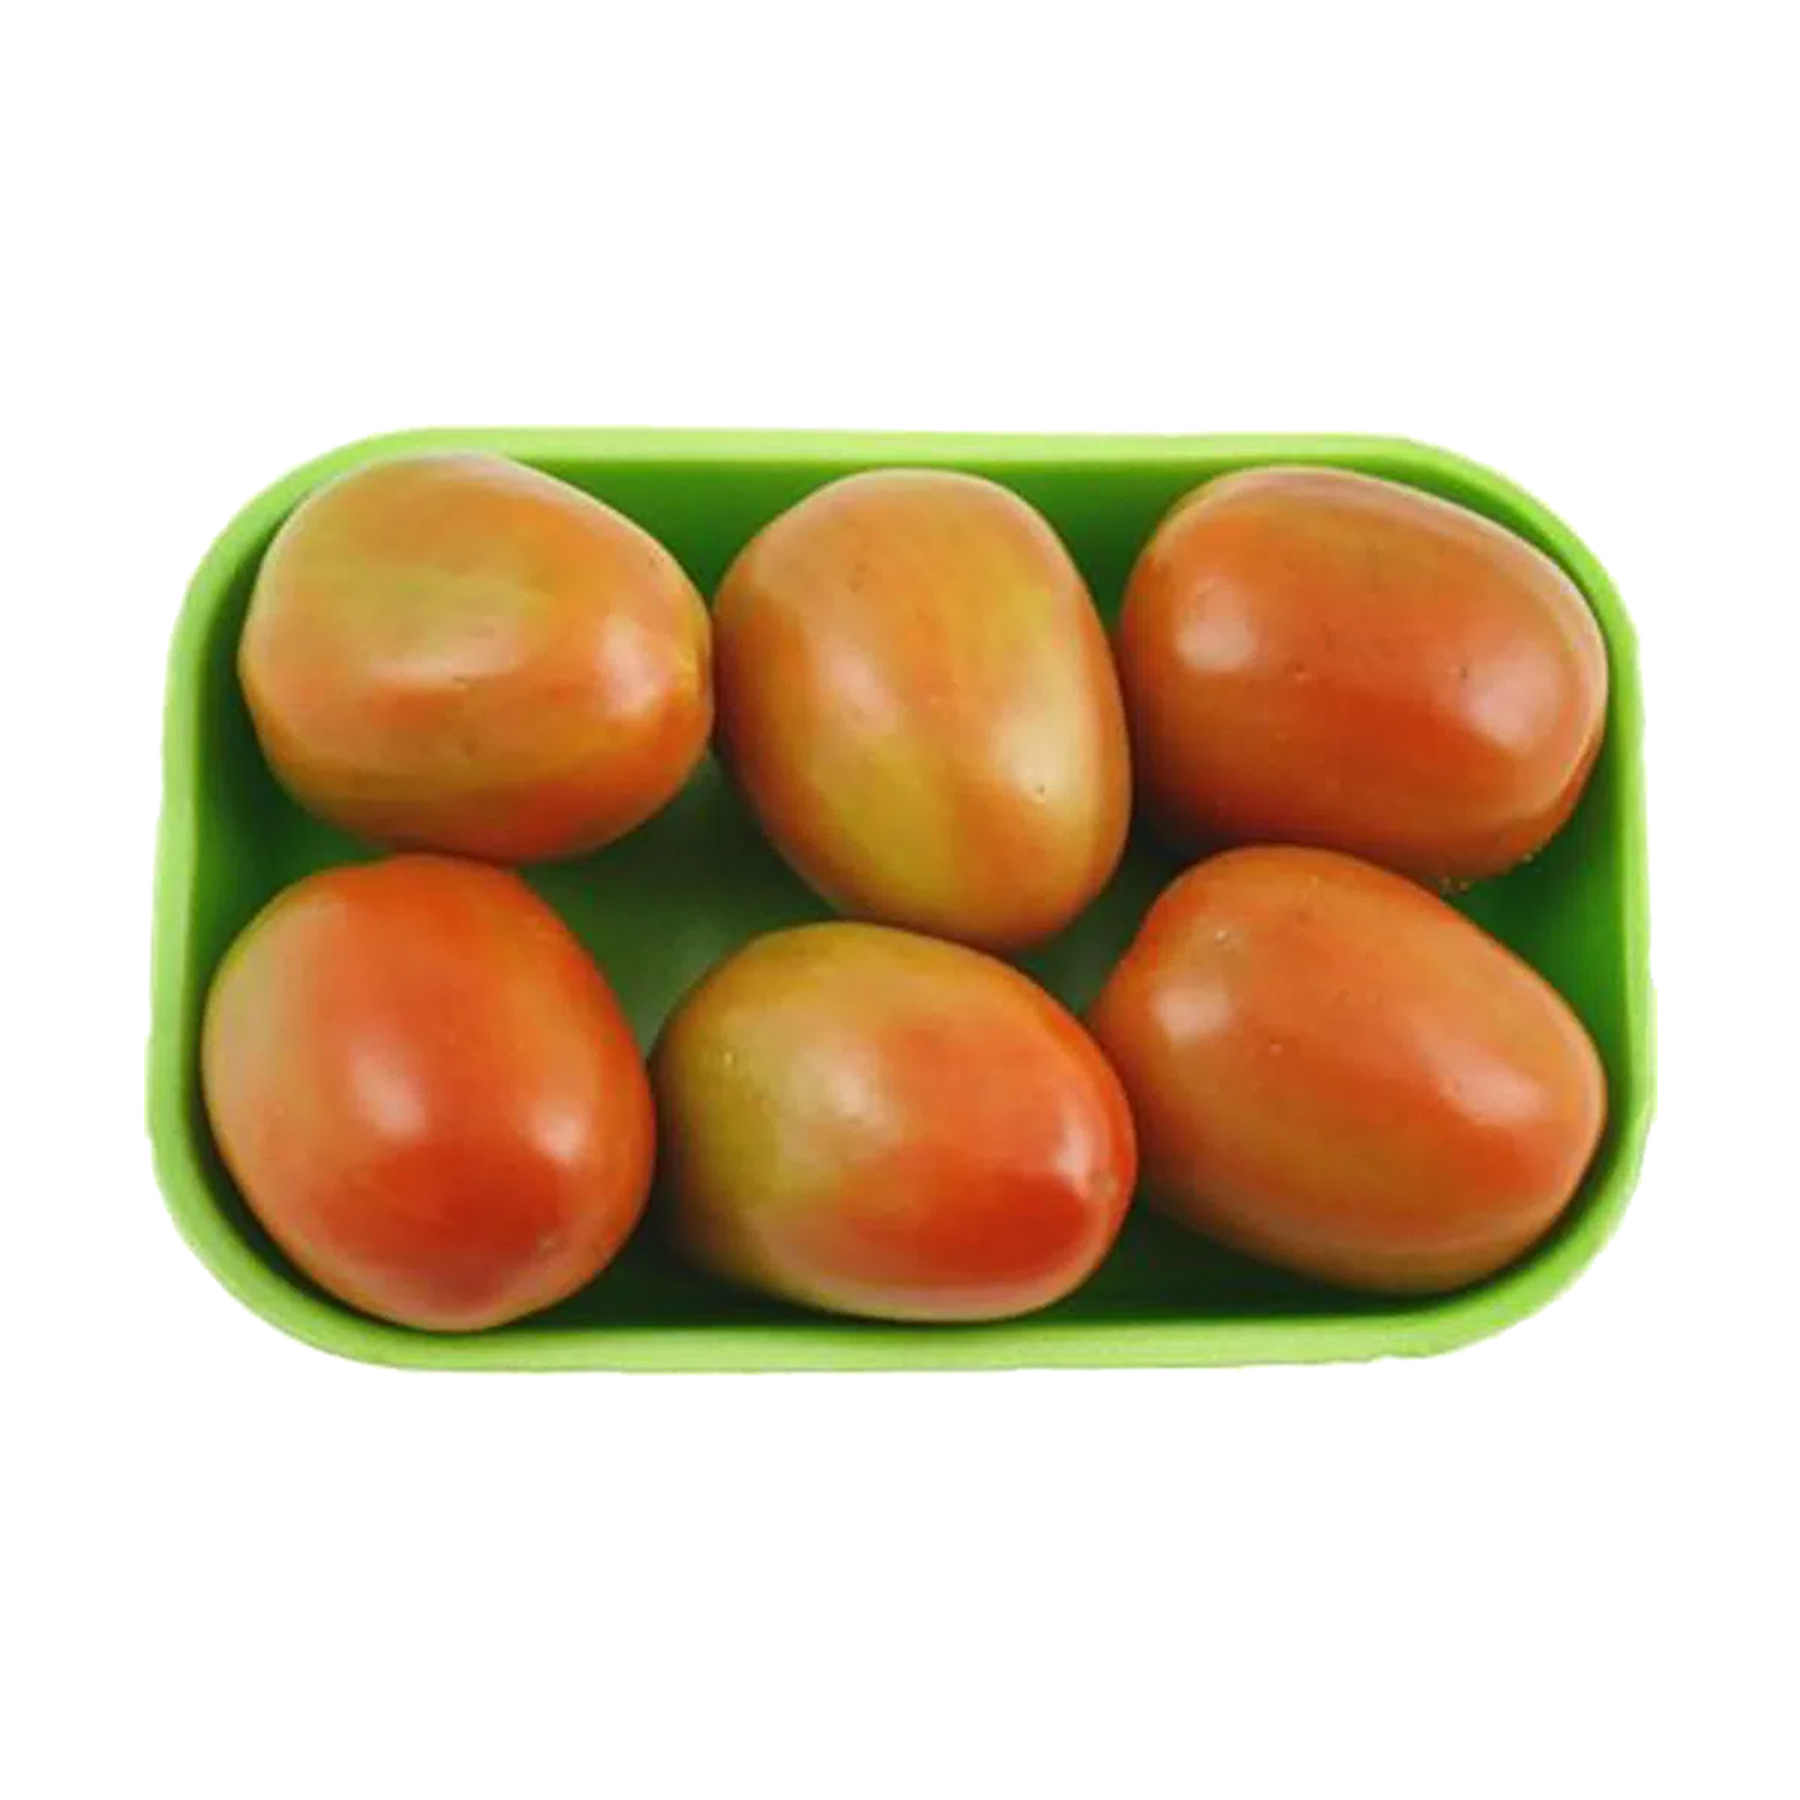 Tomate Italiano Bandeja - 4 unidades aprox. 530g